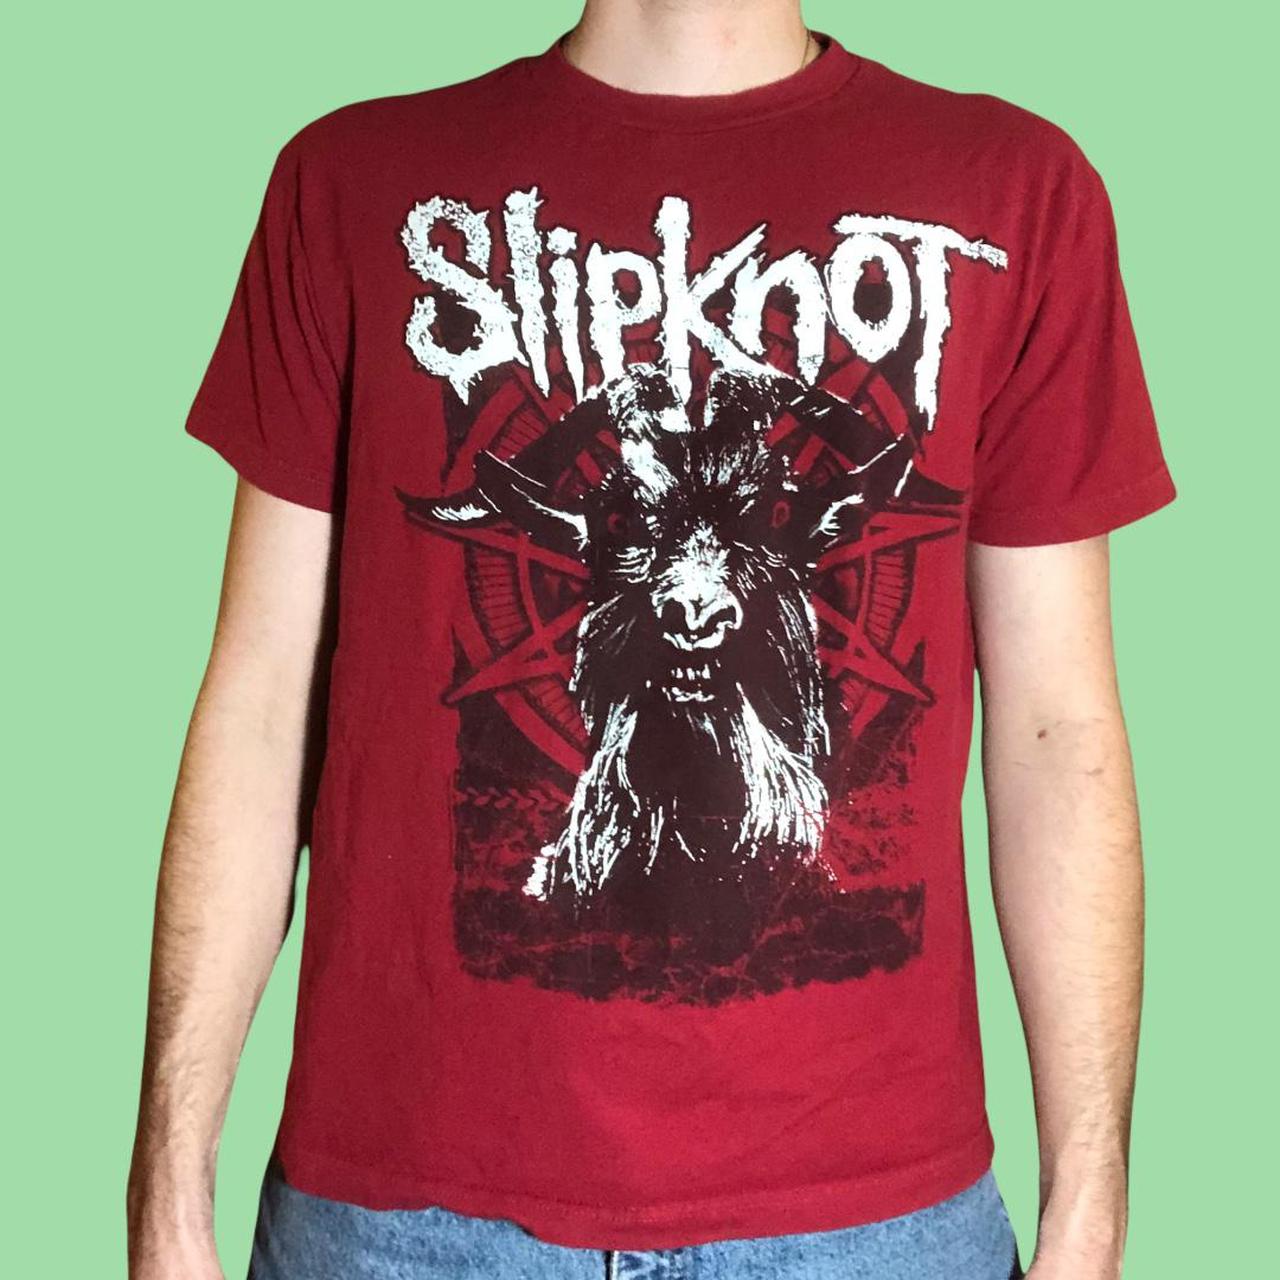 Product Image 1 - Red Slipknot metal t-shirt

Sick Satanic